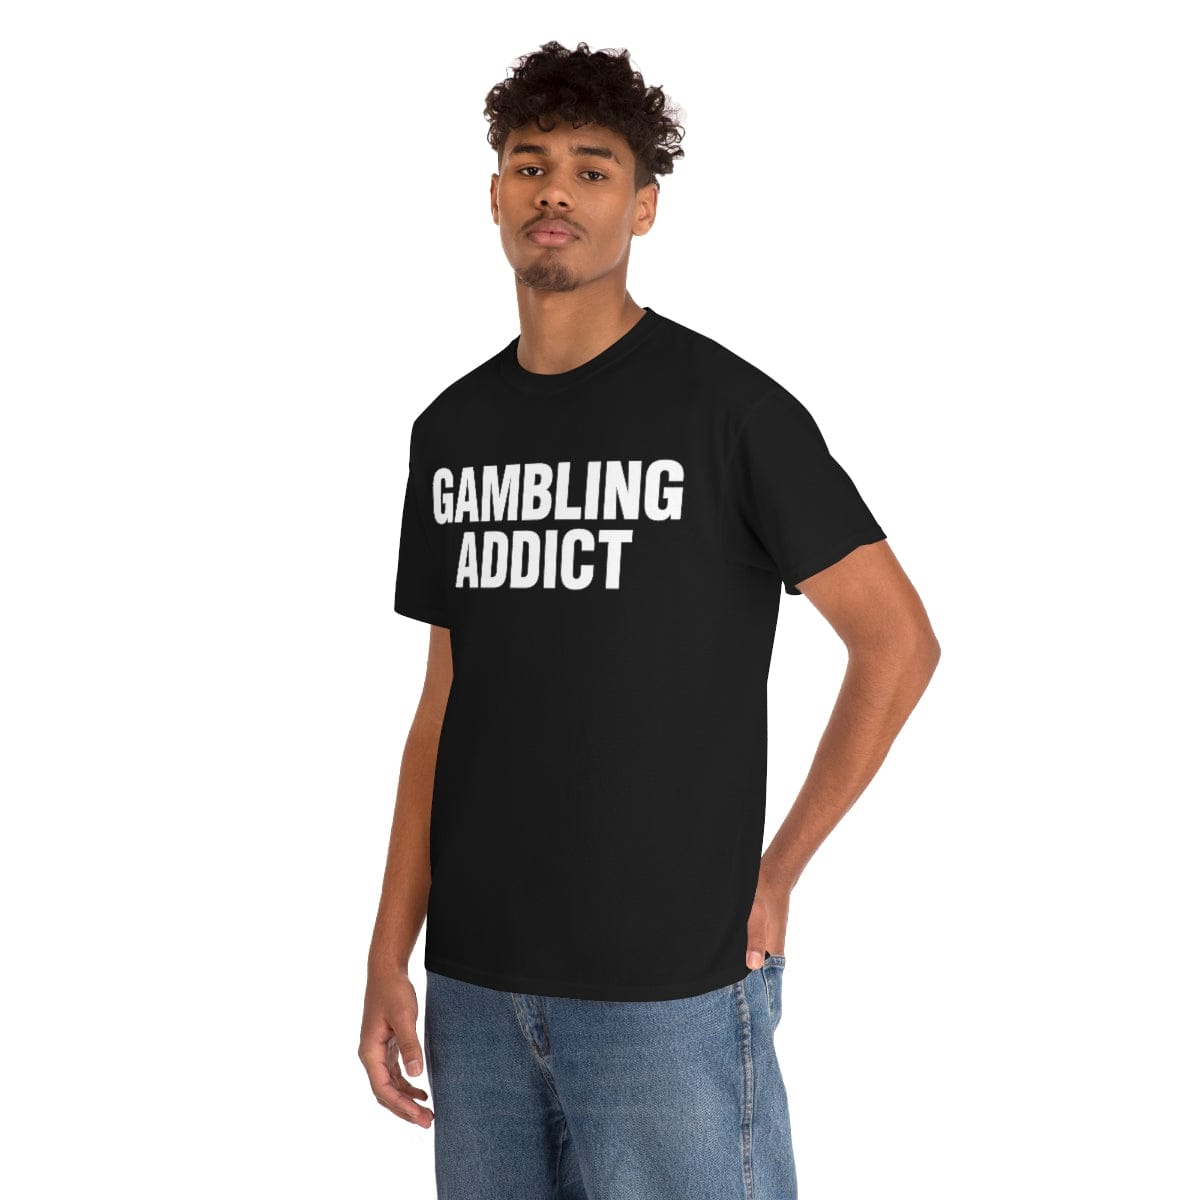 GAMBLING ADDICT